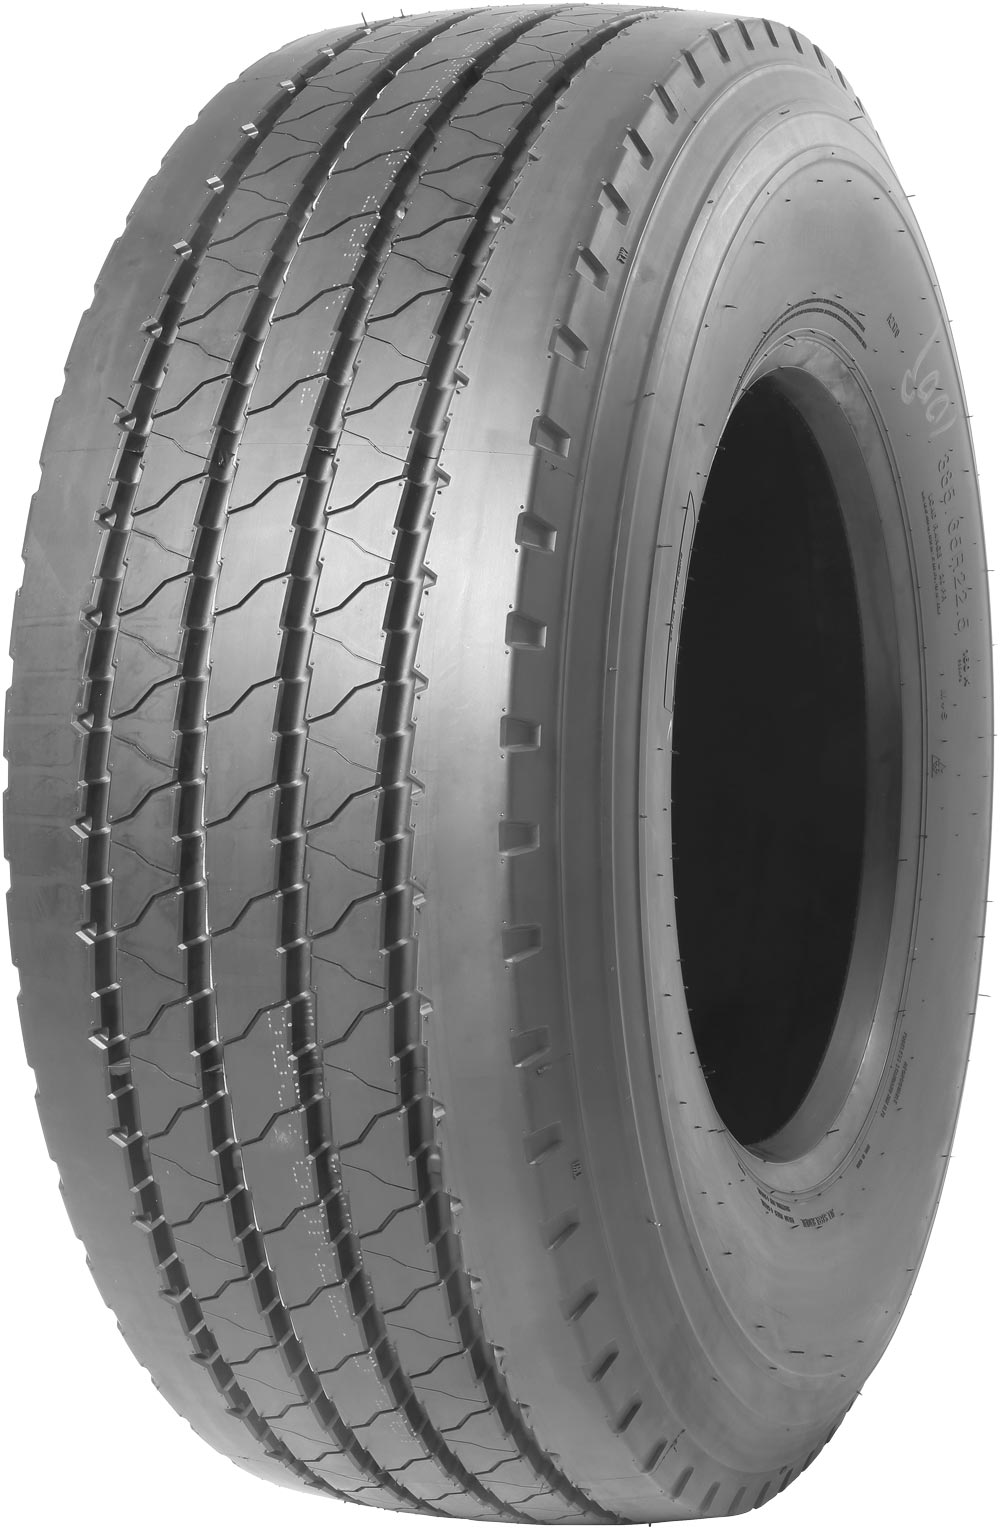 product_type-heavy_tires TRAZANO SMART TRANS T 20 TL 385/65 R22.5 160K